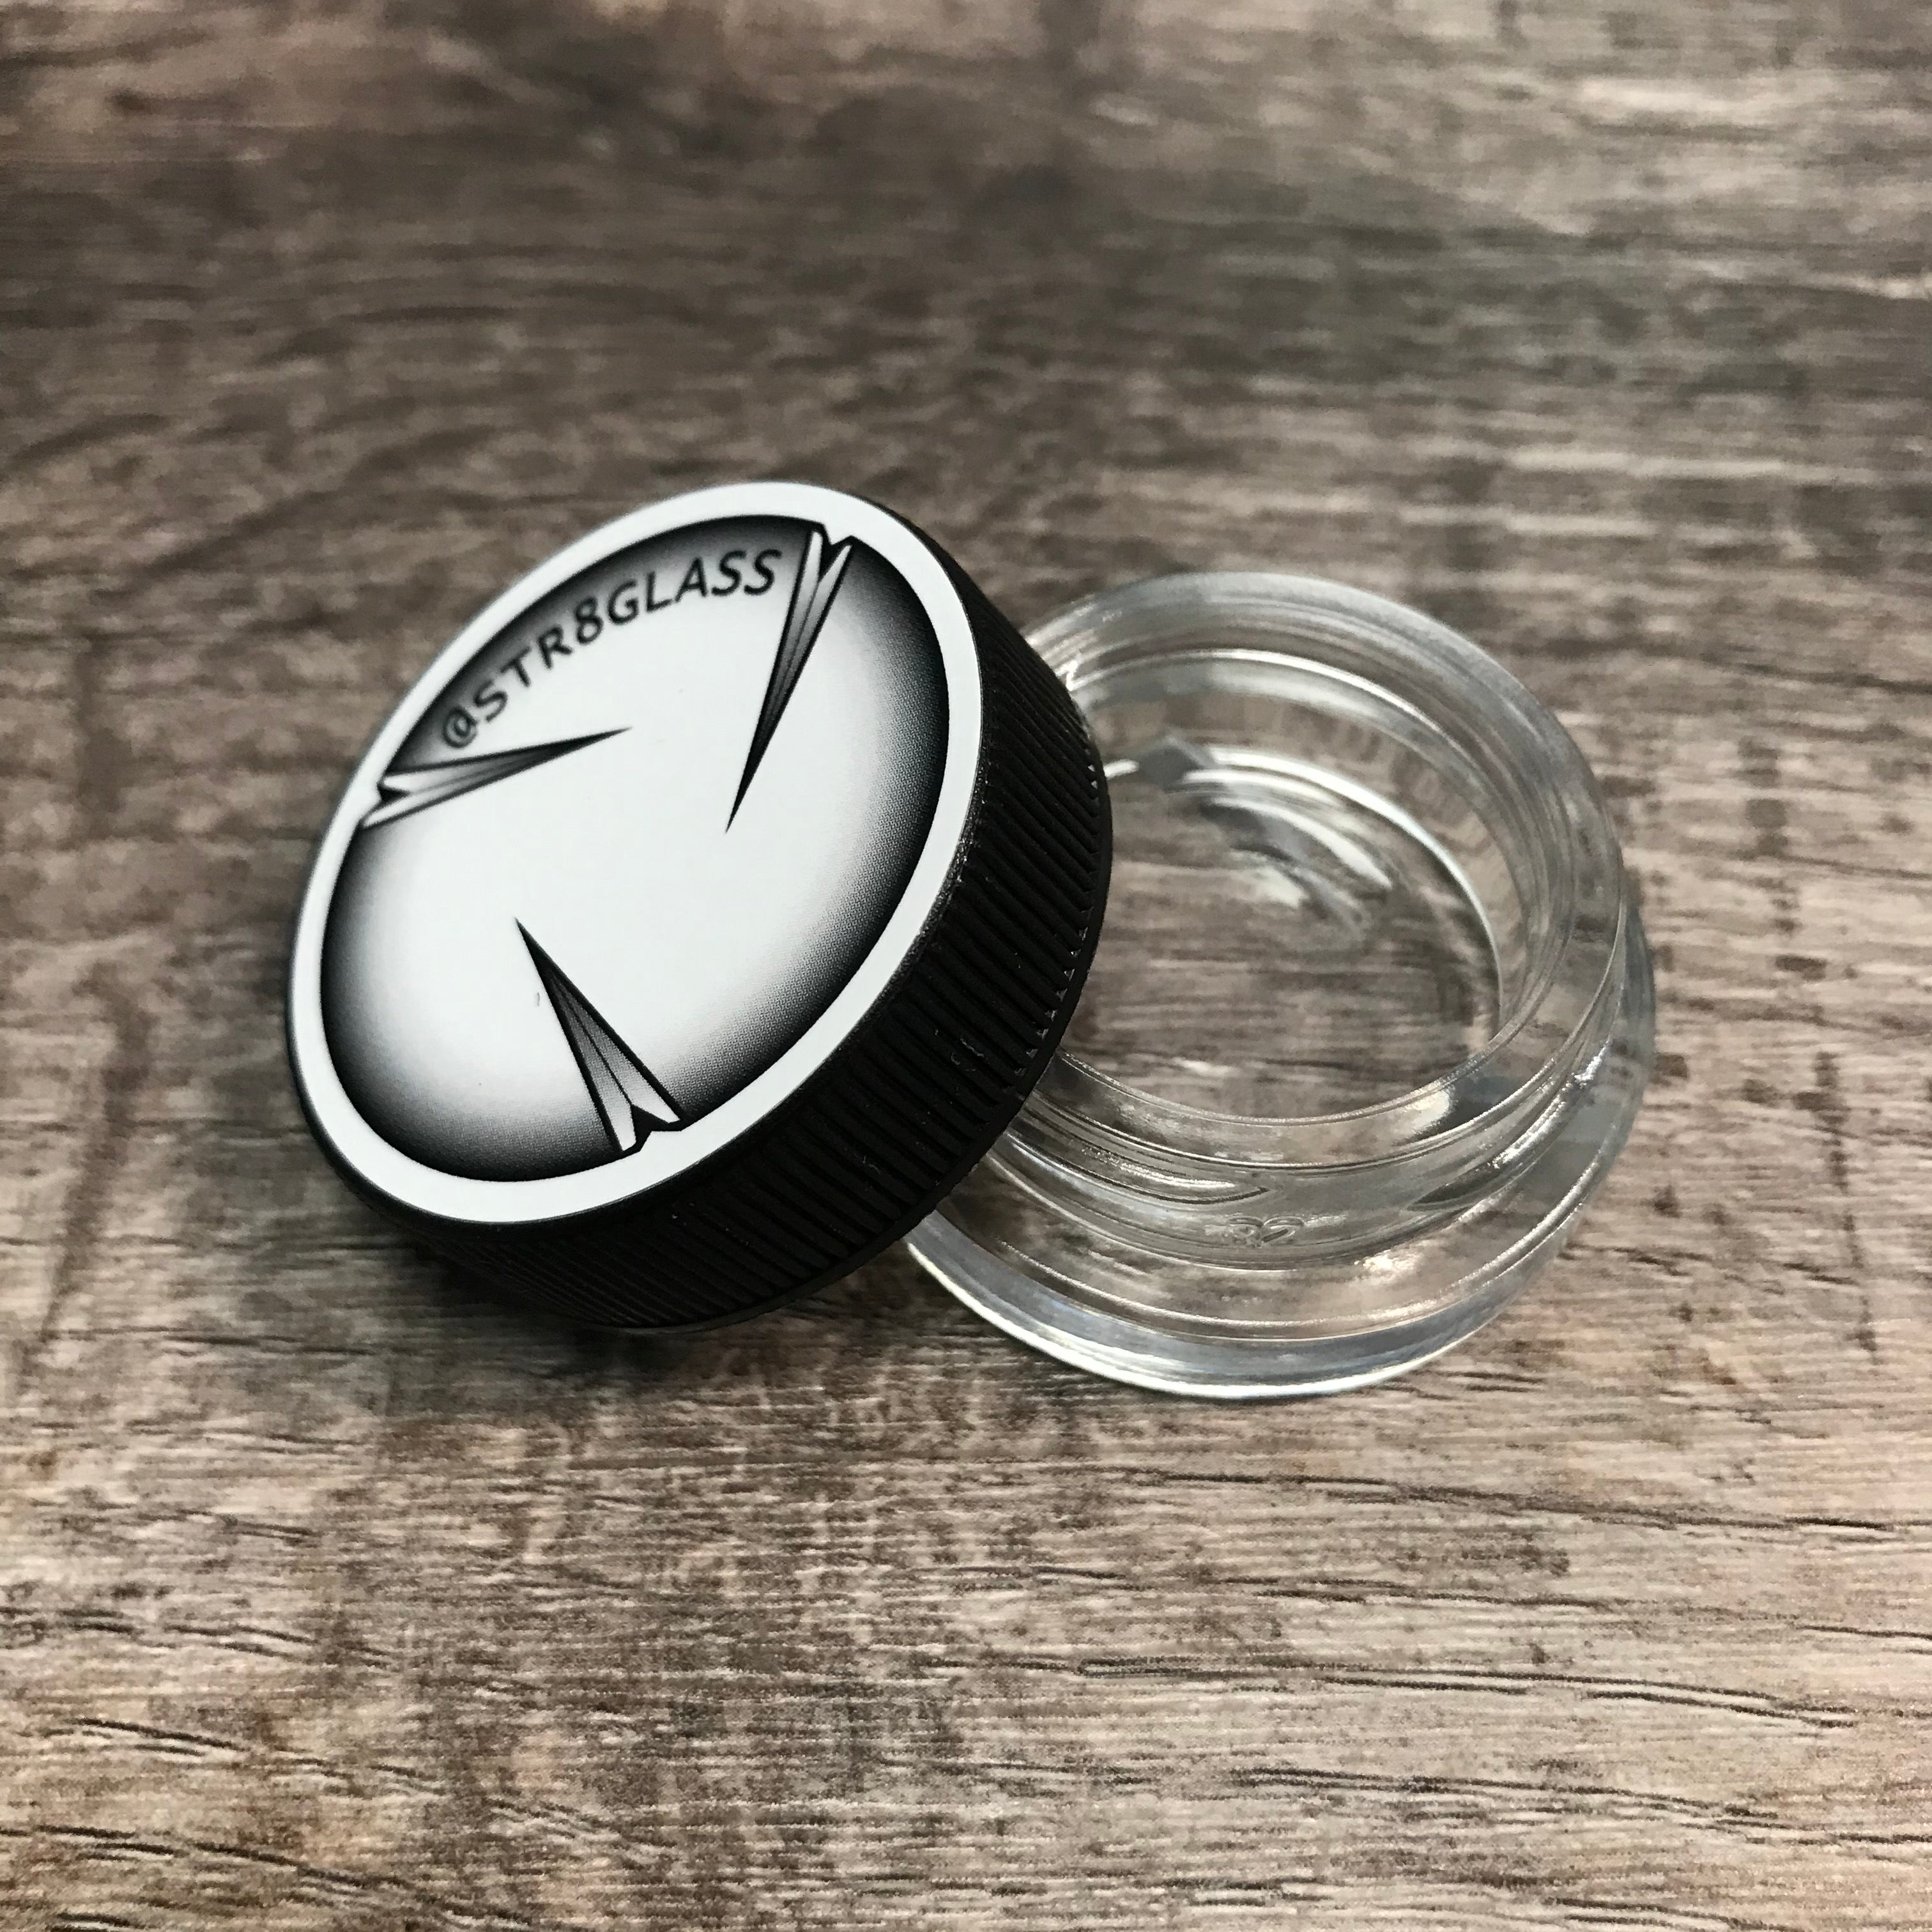 Str8 Glass Concentrate Jar & Spinner Cap